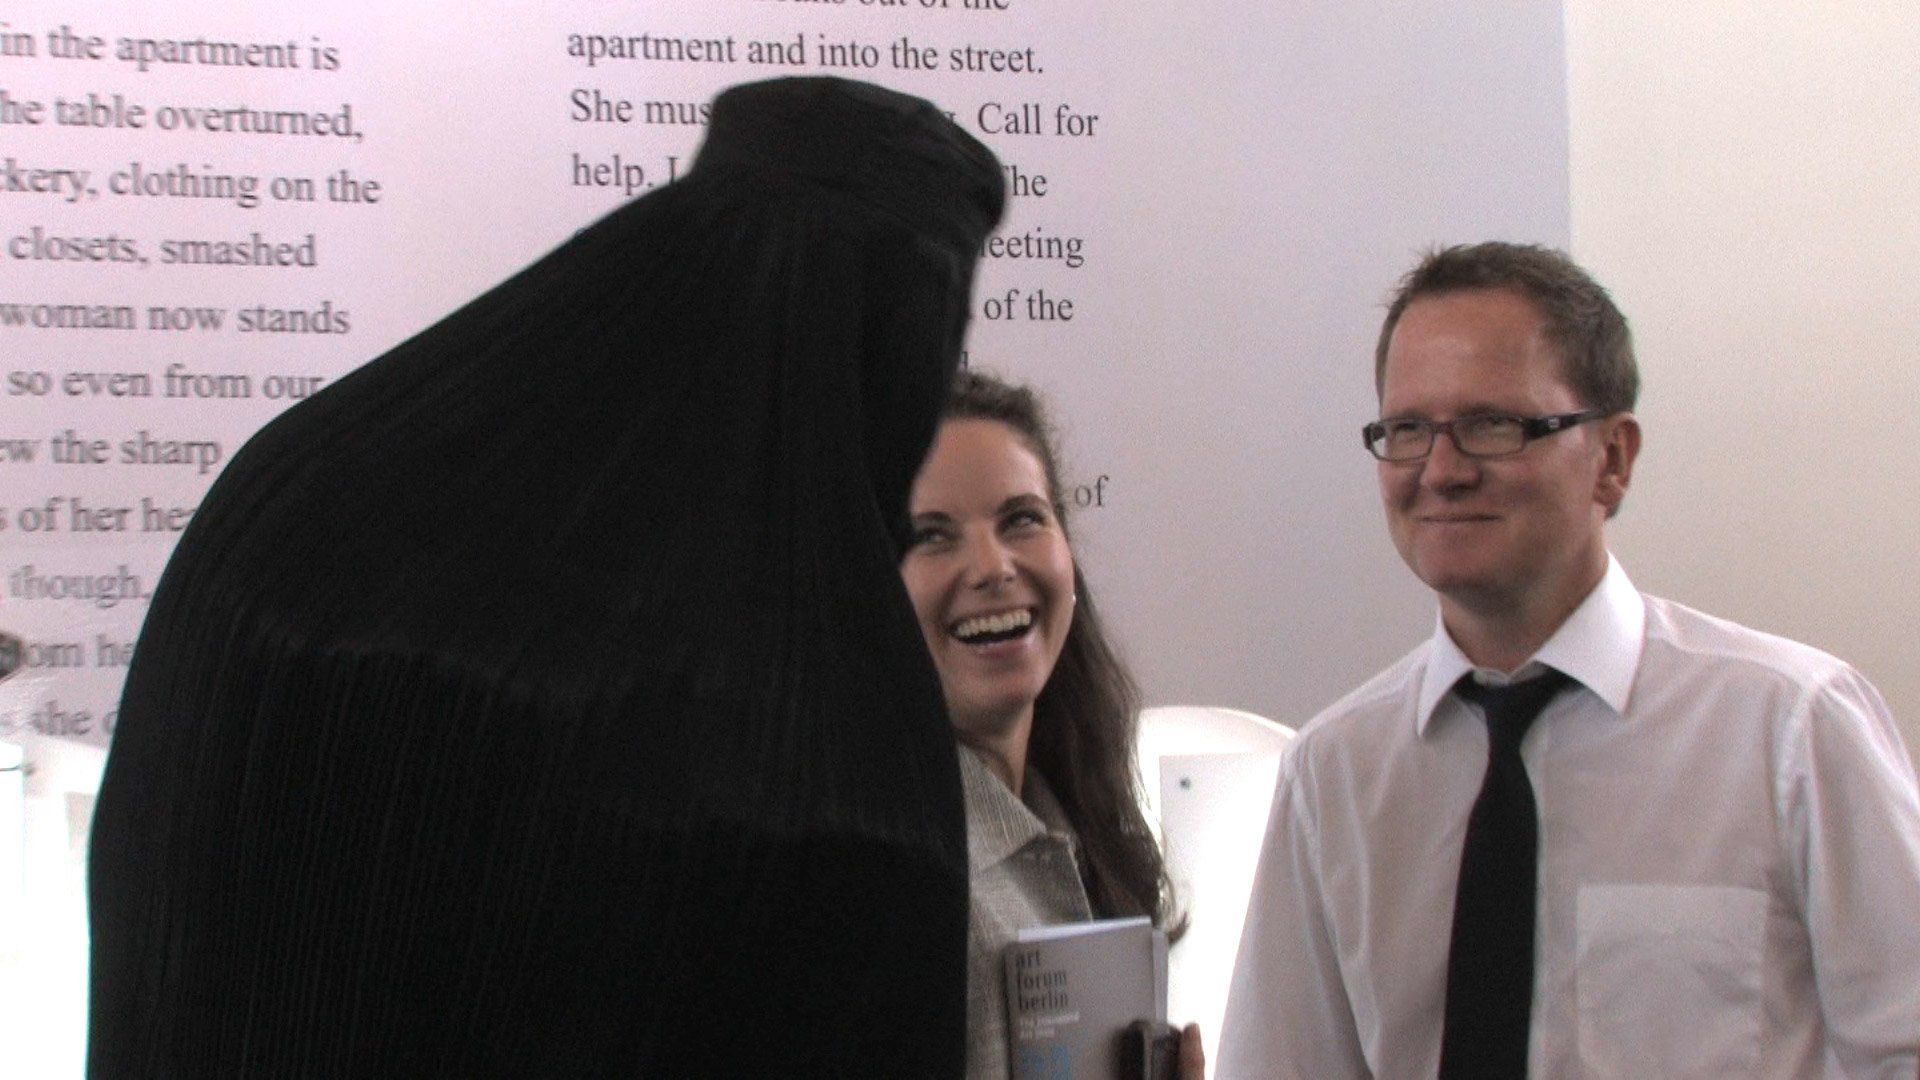 Sebastian Bieniek performance in a burqa at the Art Forum Berlin 2009 art fair.